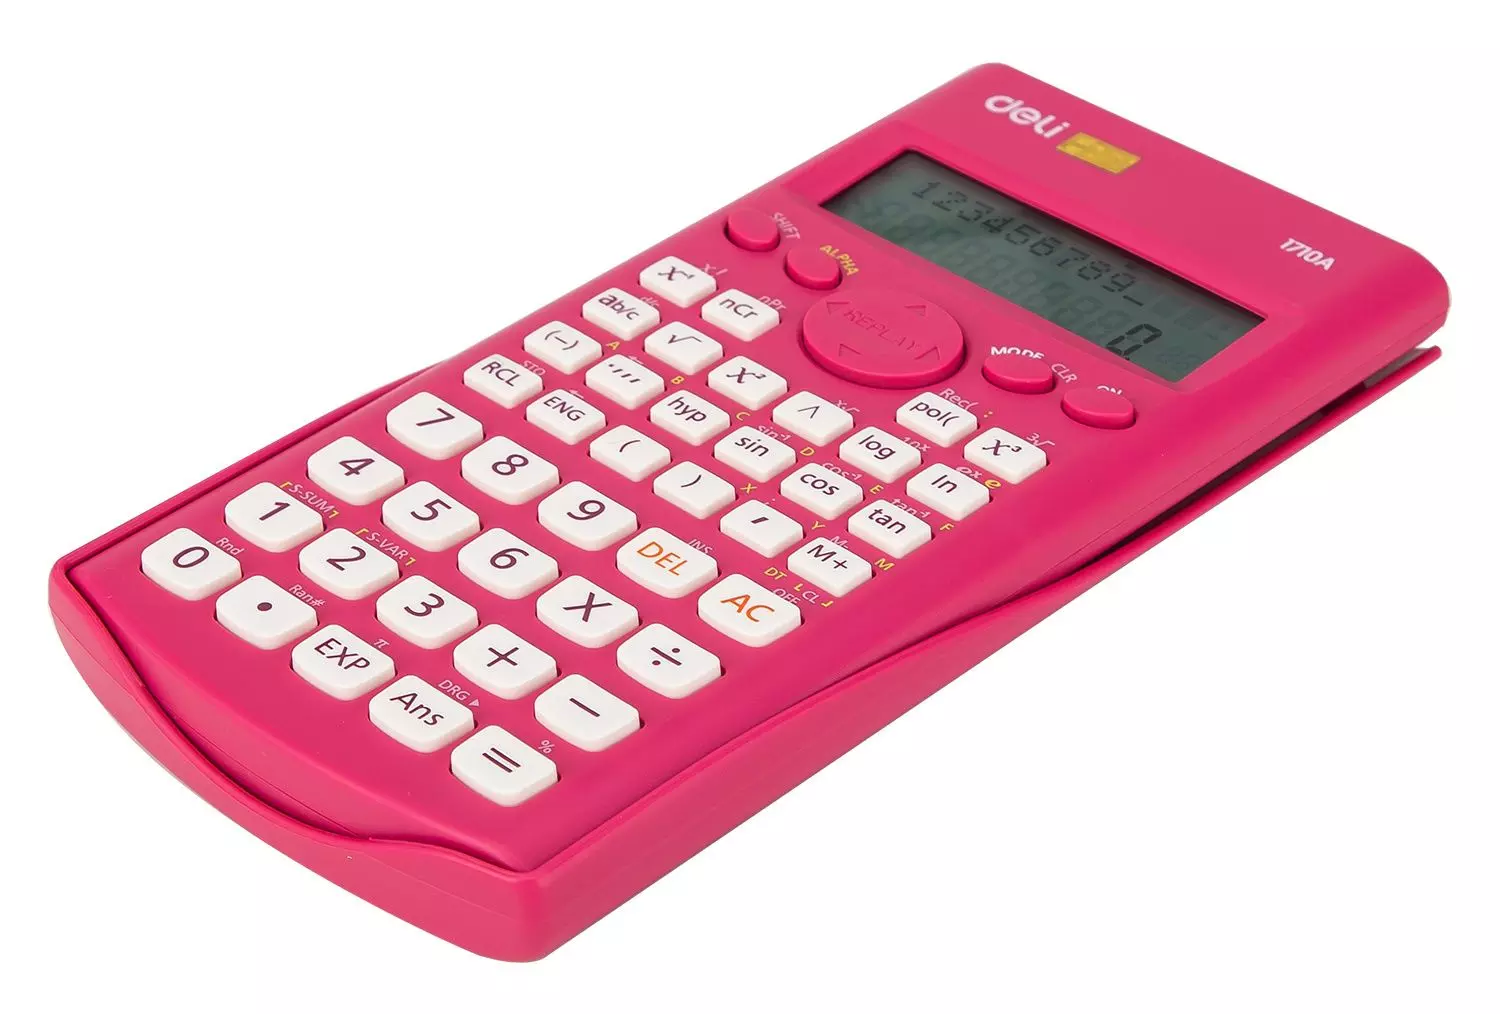 Калькулятор DELI E1710A/RED 12 разр. научный красный 240 функций